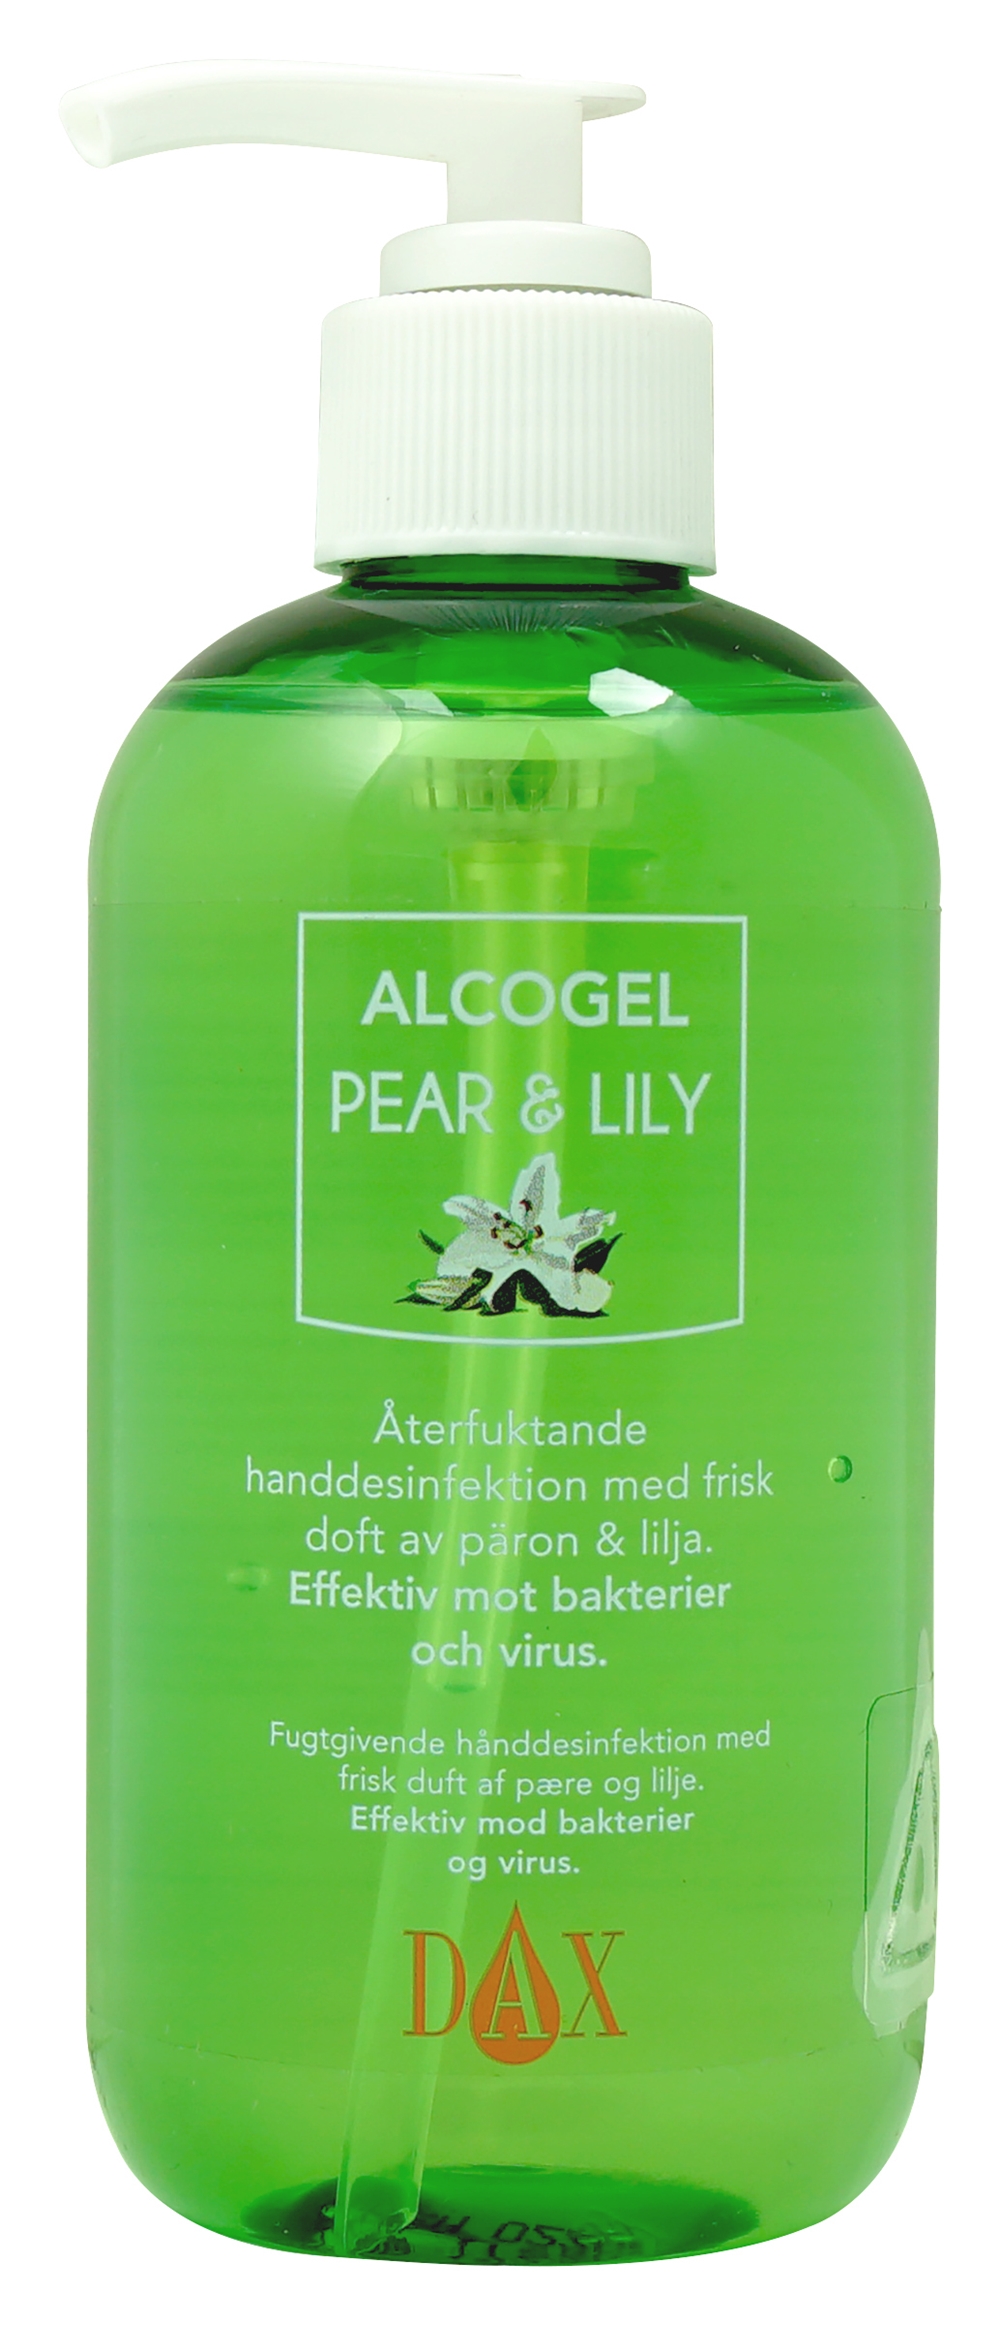 Handdesinfektion Dax Alcogel - pear/lily 250ml - 8 st/förp.